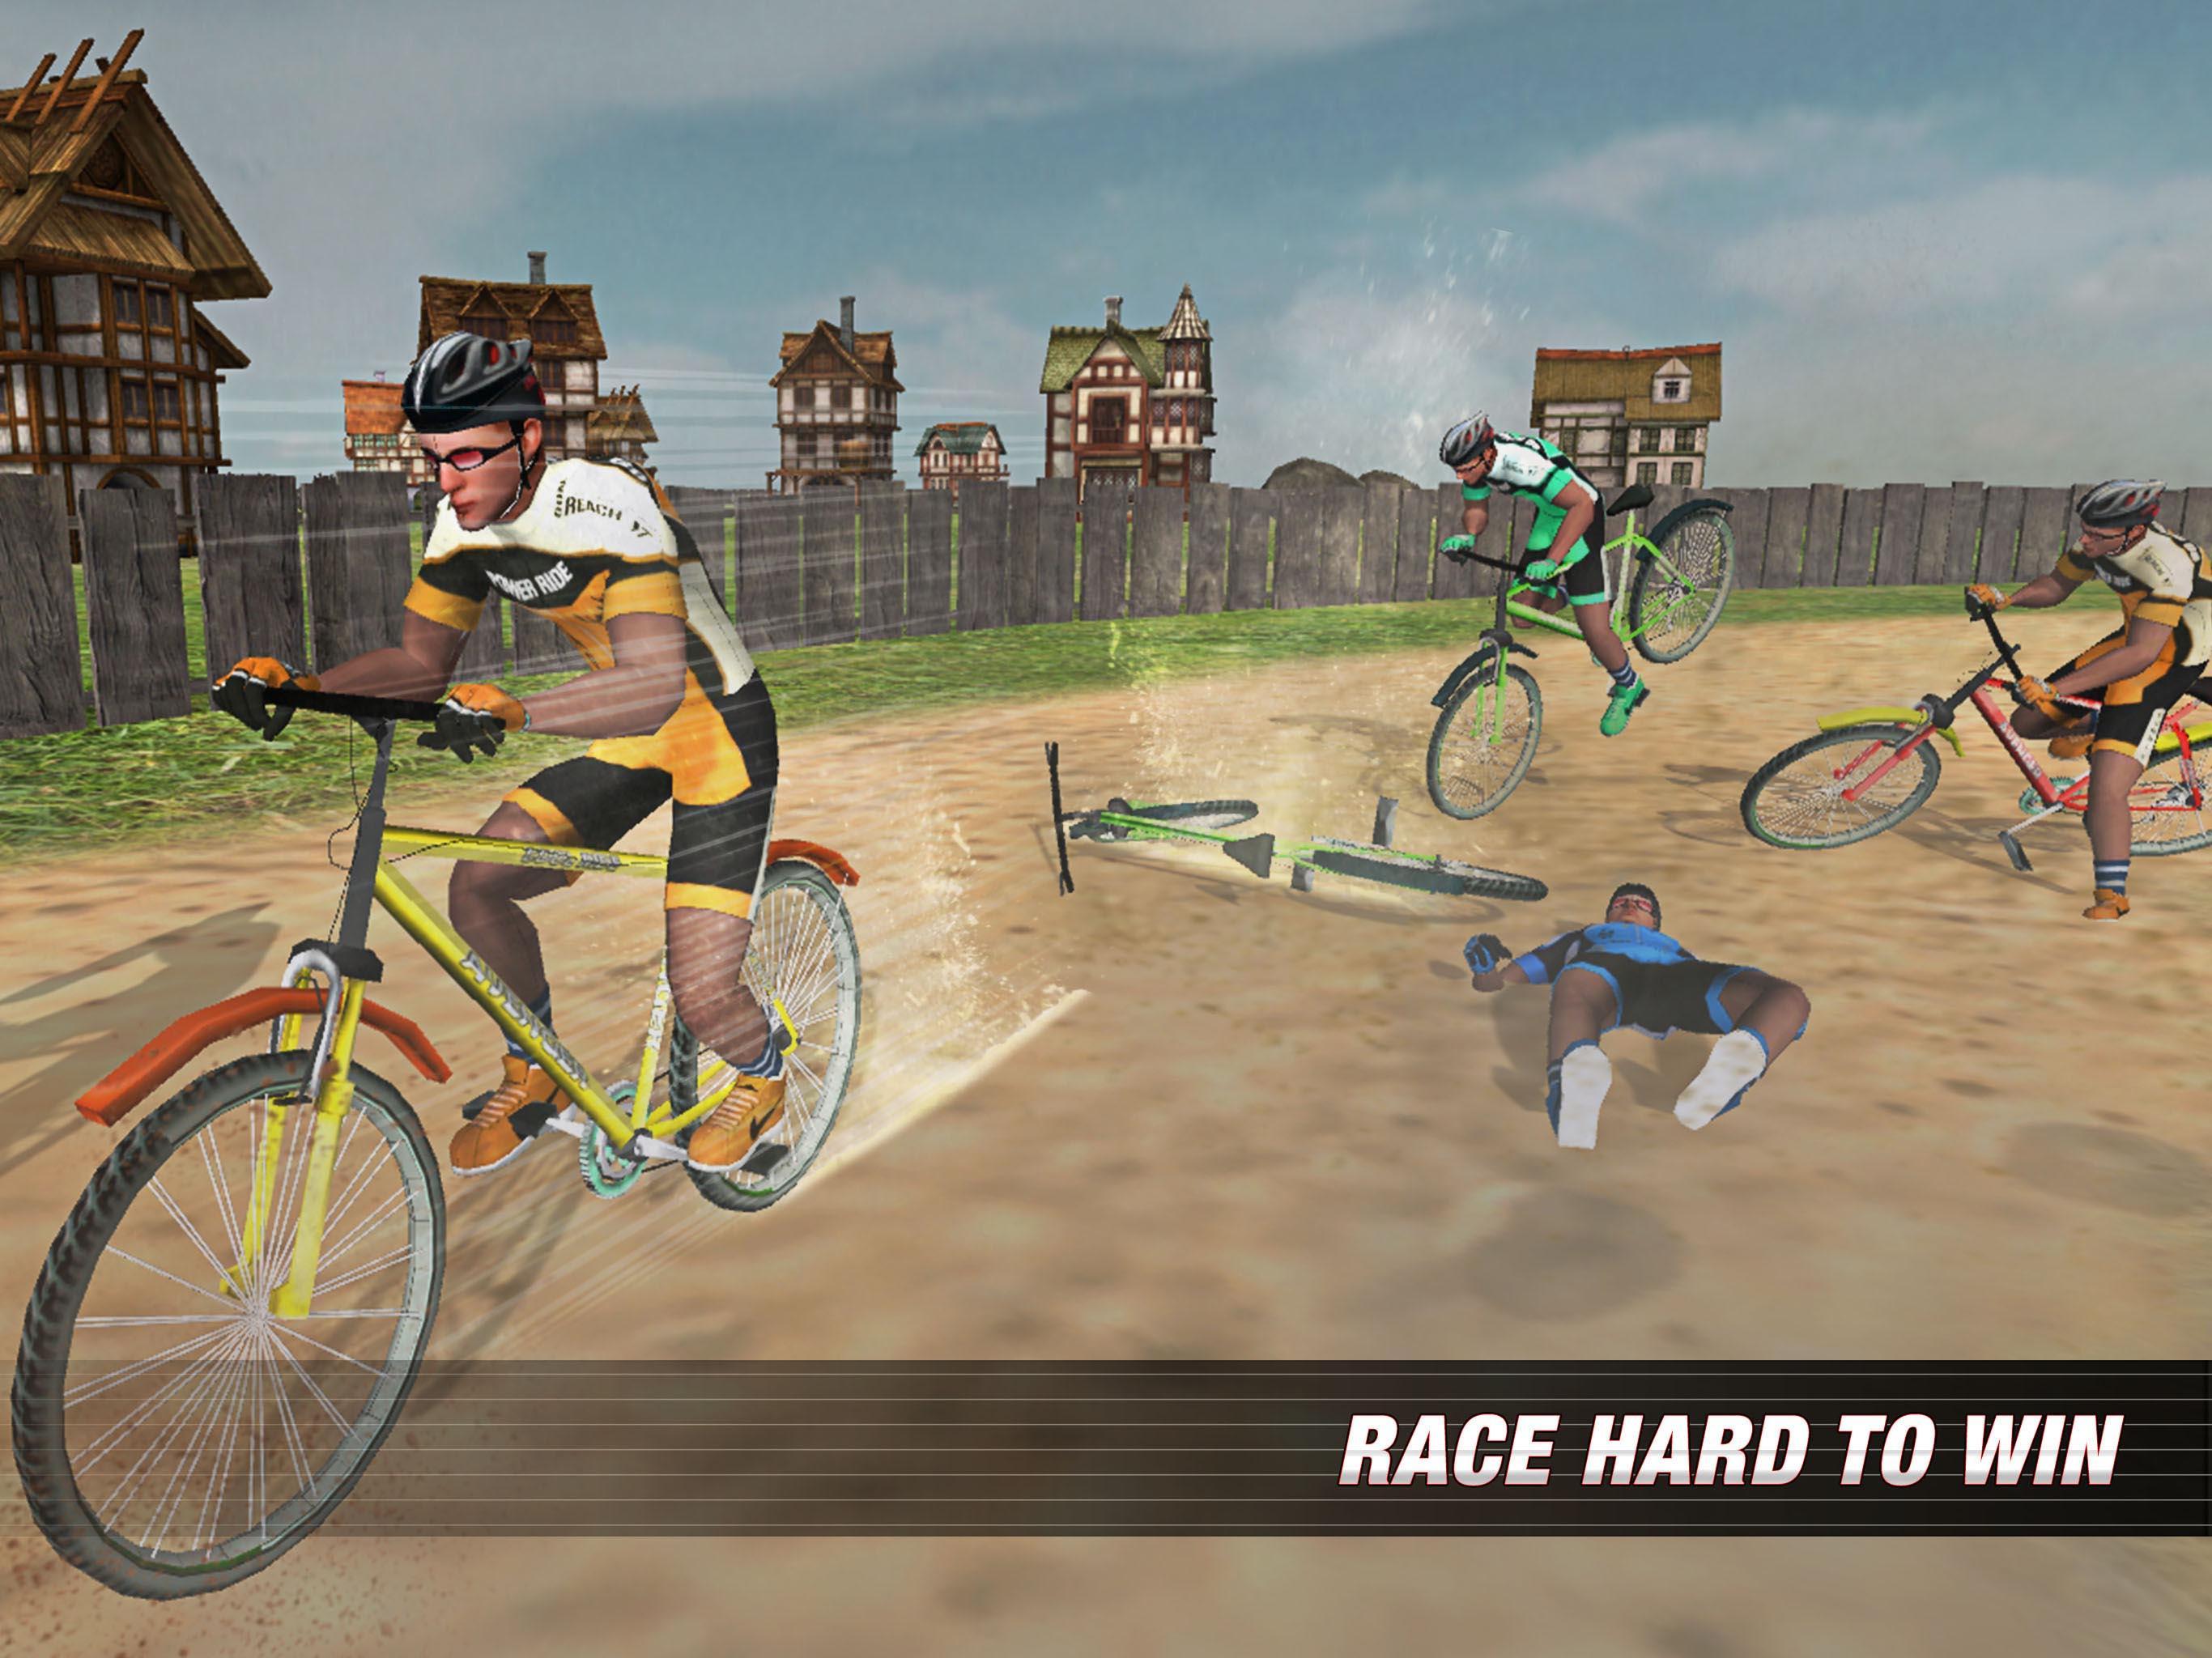 Bike race racing game. Бмх игра. Игра гонки на велосипедах. Игра про велосипеды на ПК. Игра гонки на BMX.